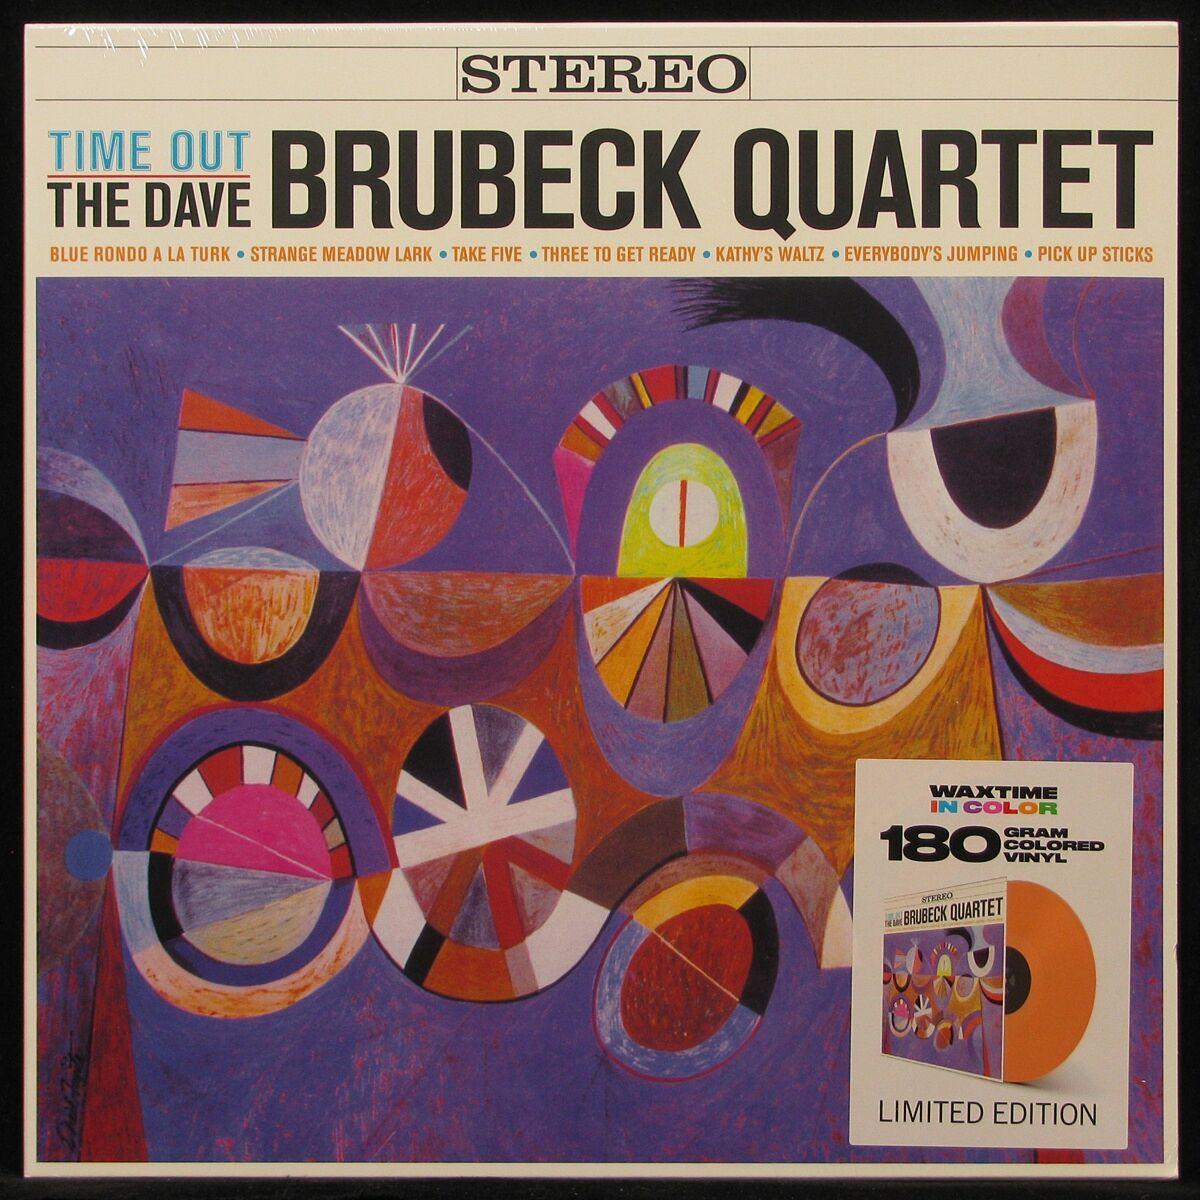 Dave Brubeck Quartet Time Out (Limited Edition) LP